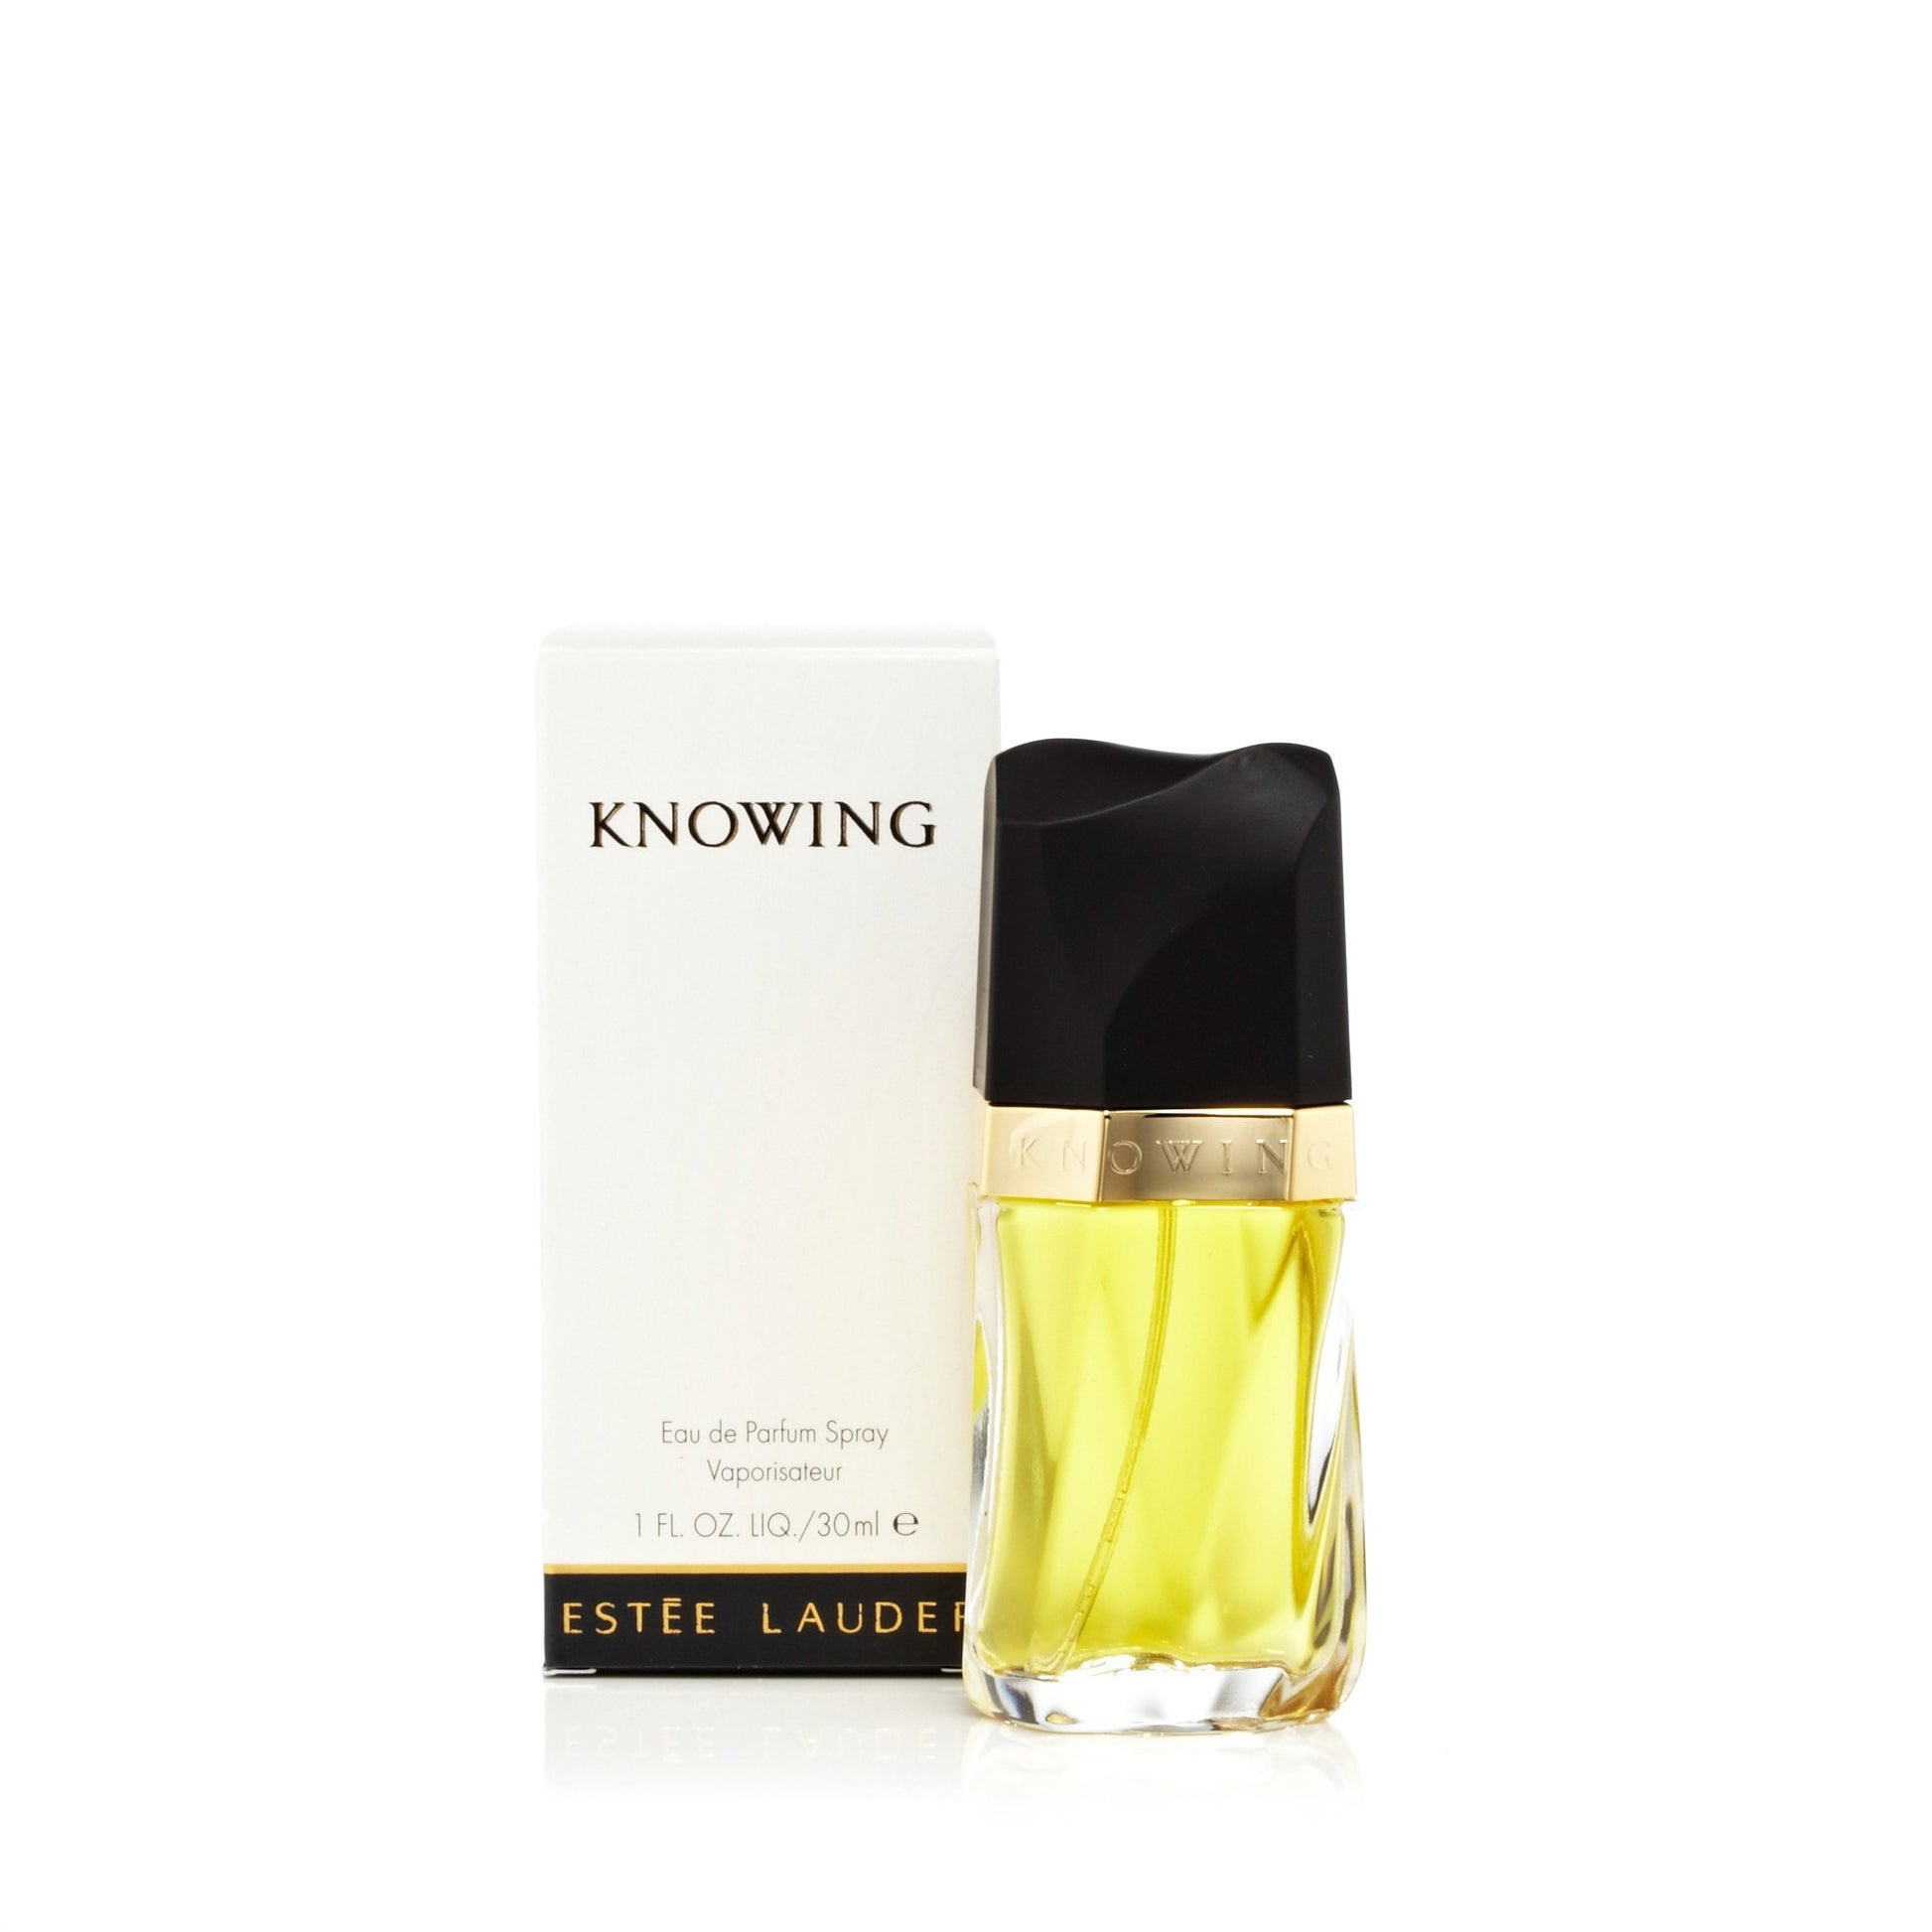  Knowing Eau de Parfum Spray for Women by Estee Lauder 1.0 oz. Click to open in modal